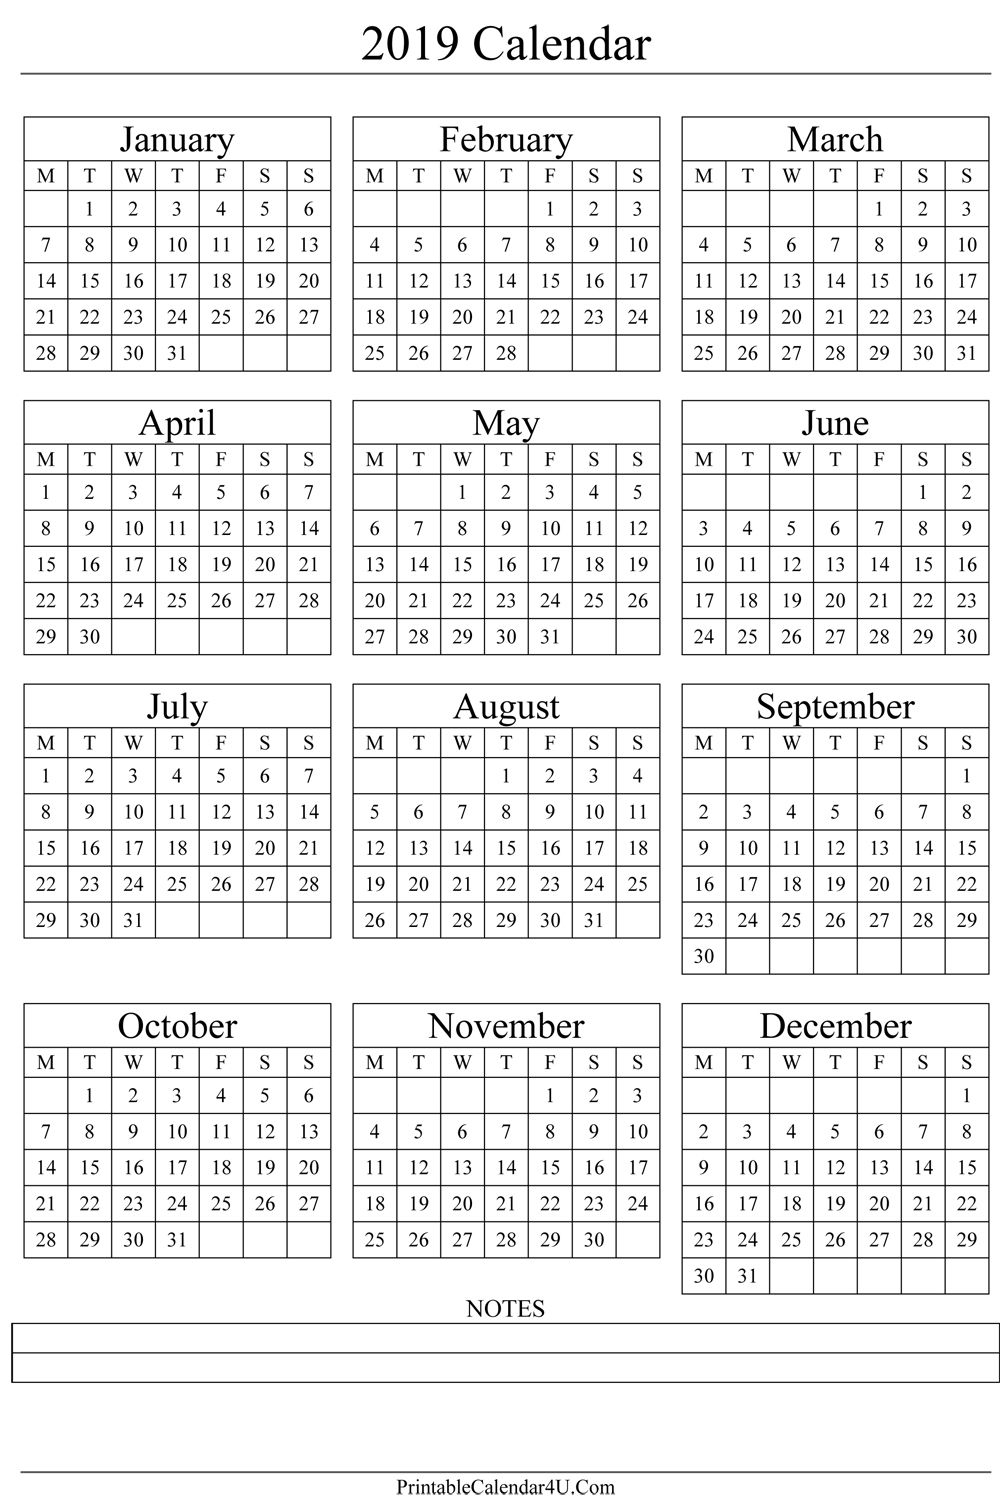 one-year-calendar-printable-2019-qualads